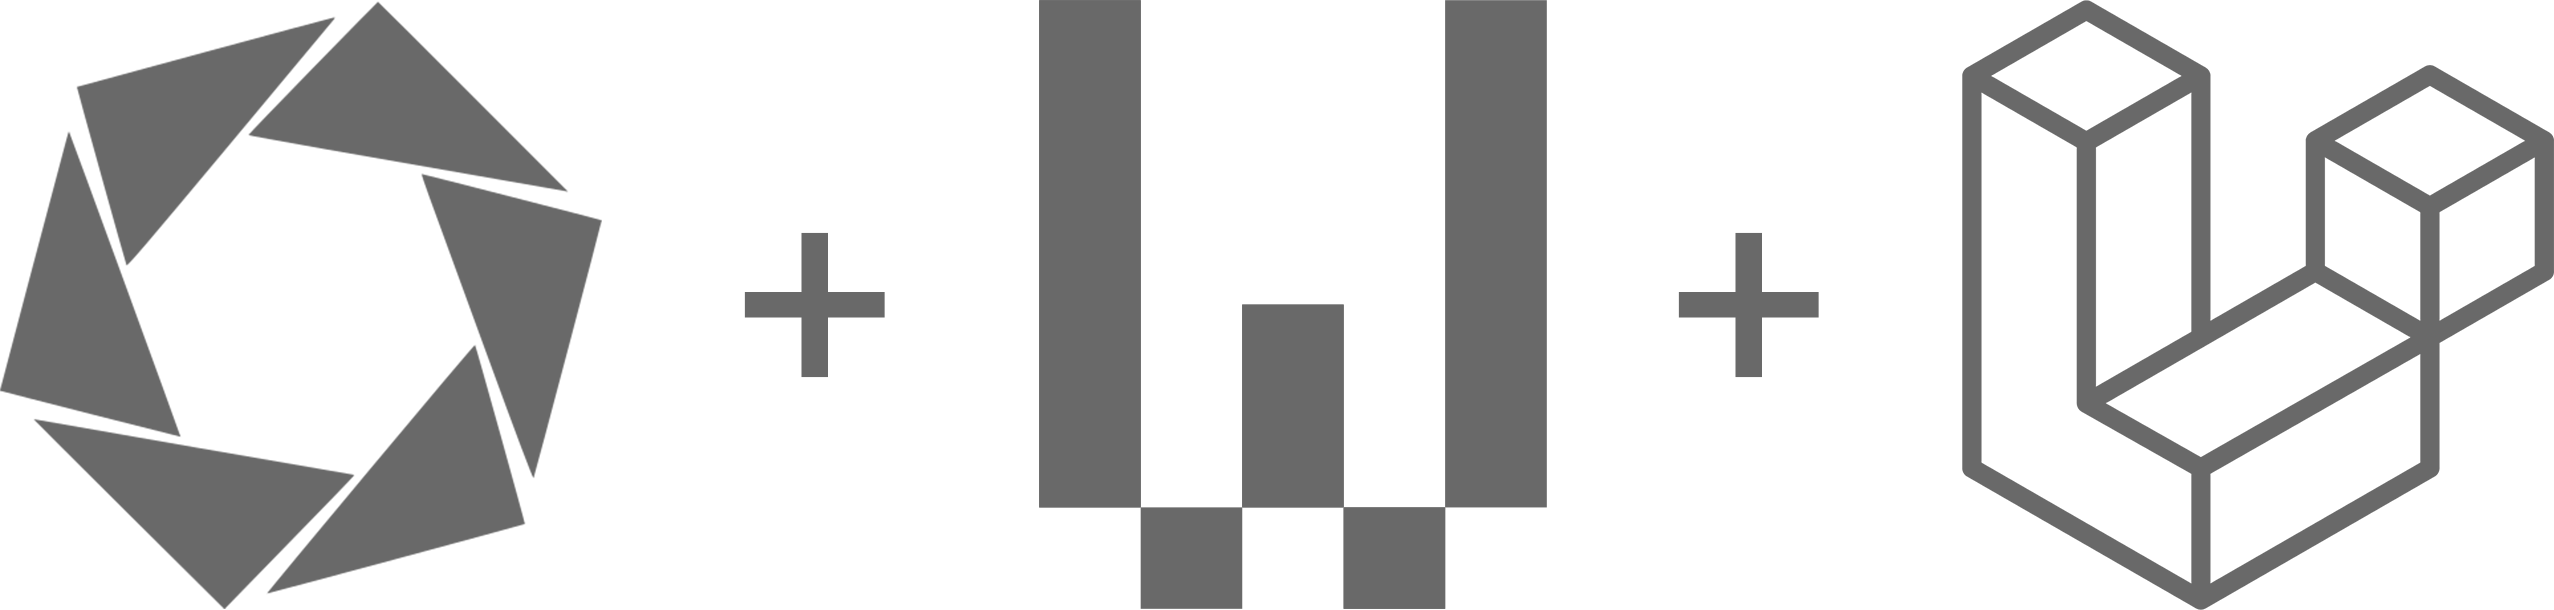 CycleORM + WayOfDev + Laravel Logo for Light GitHub Mode